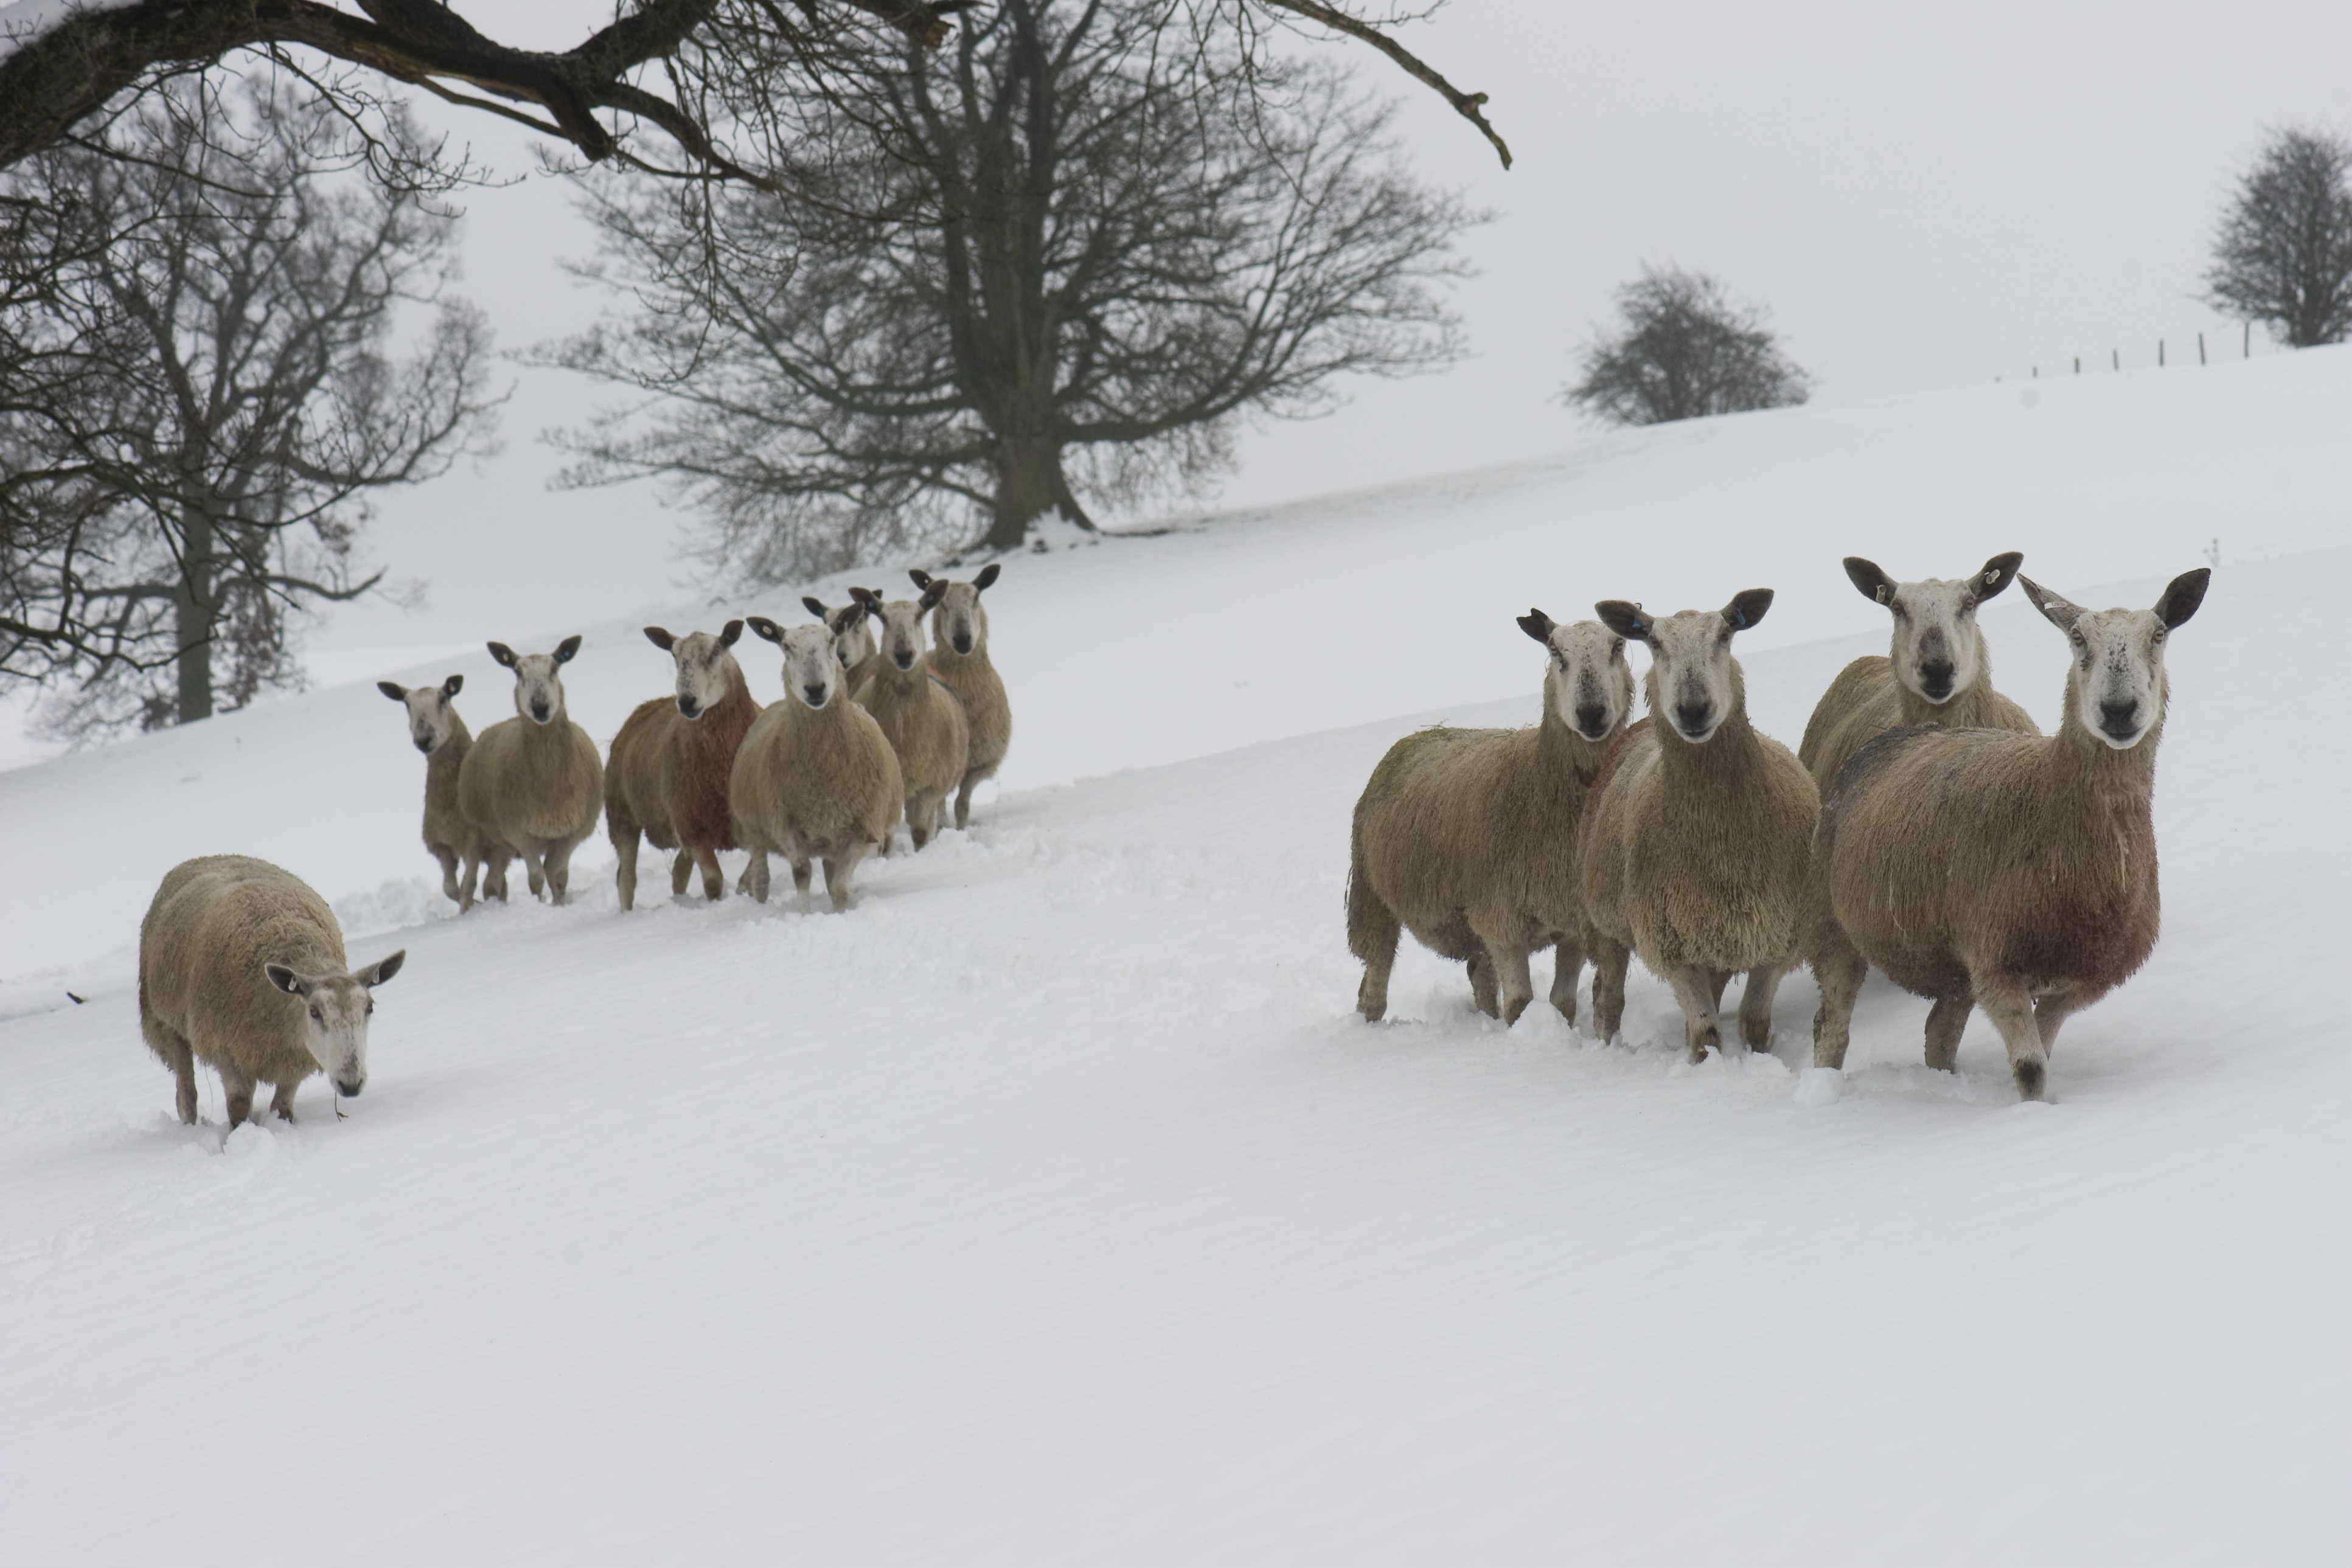 A flock of sheep in a snowy field.